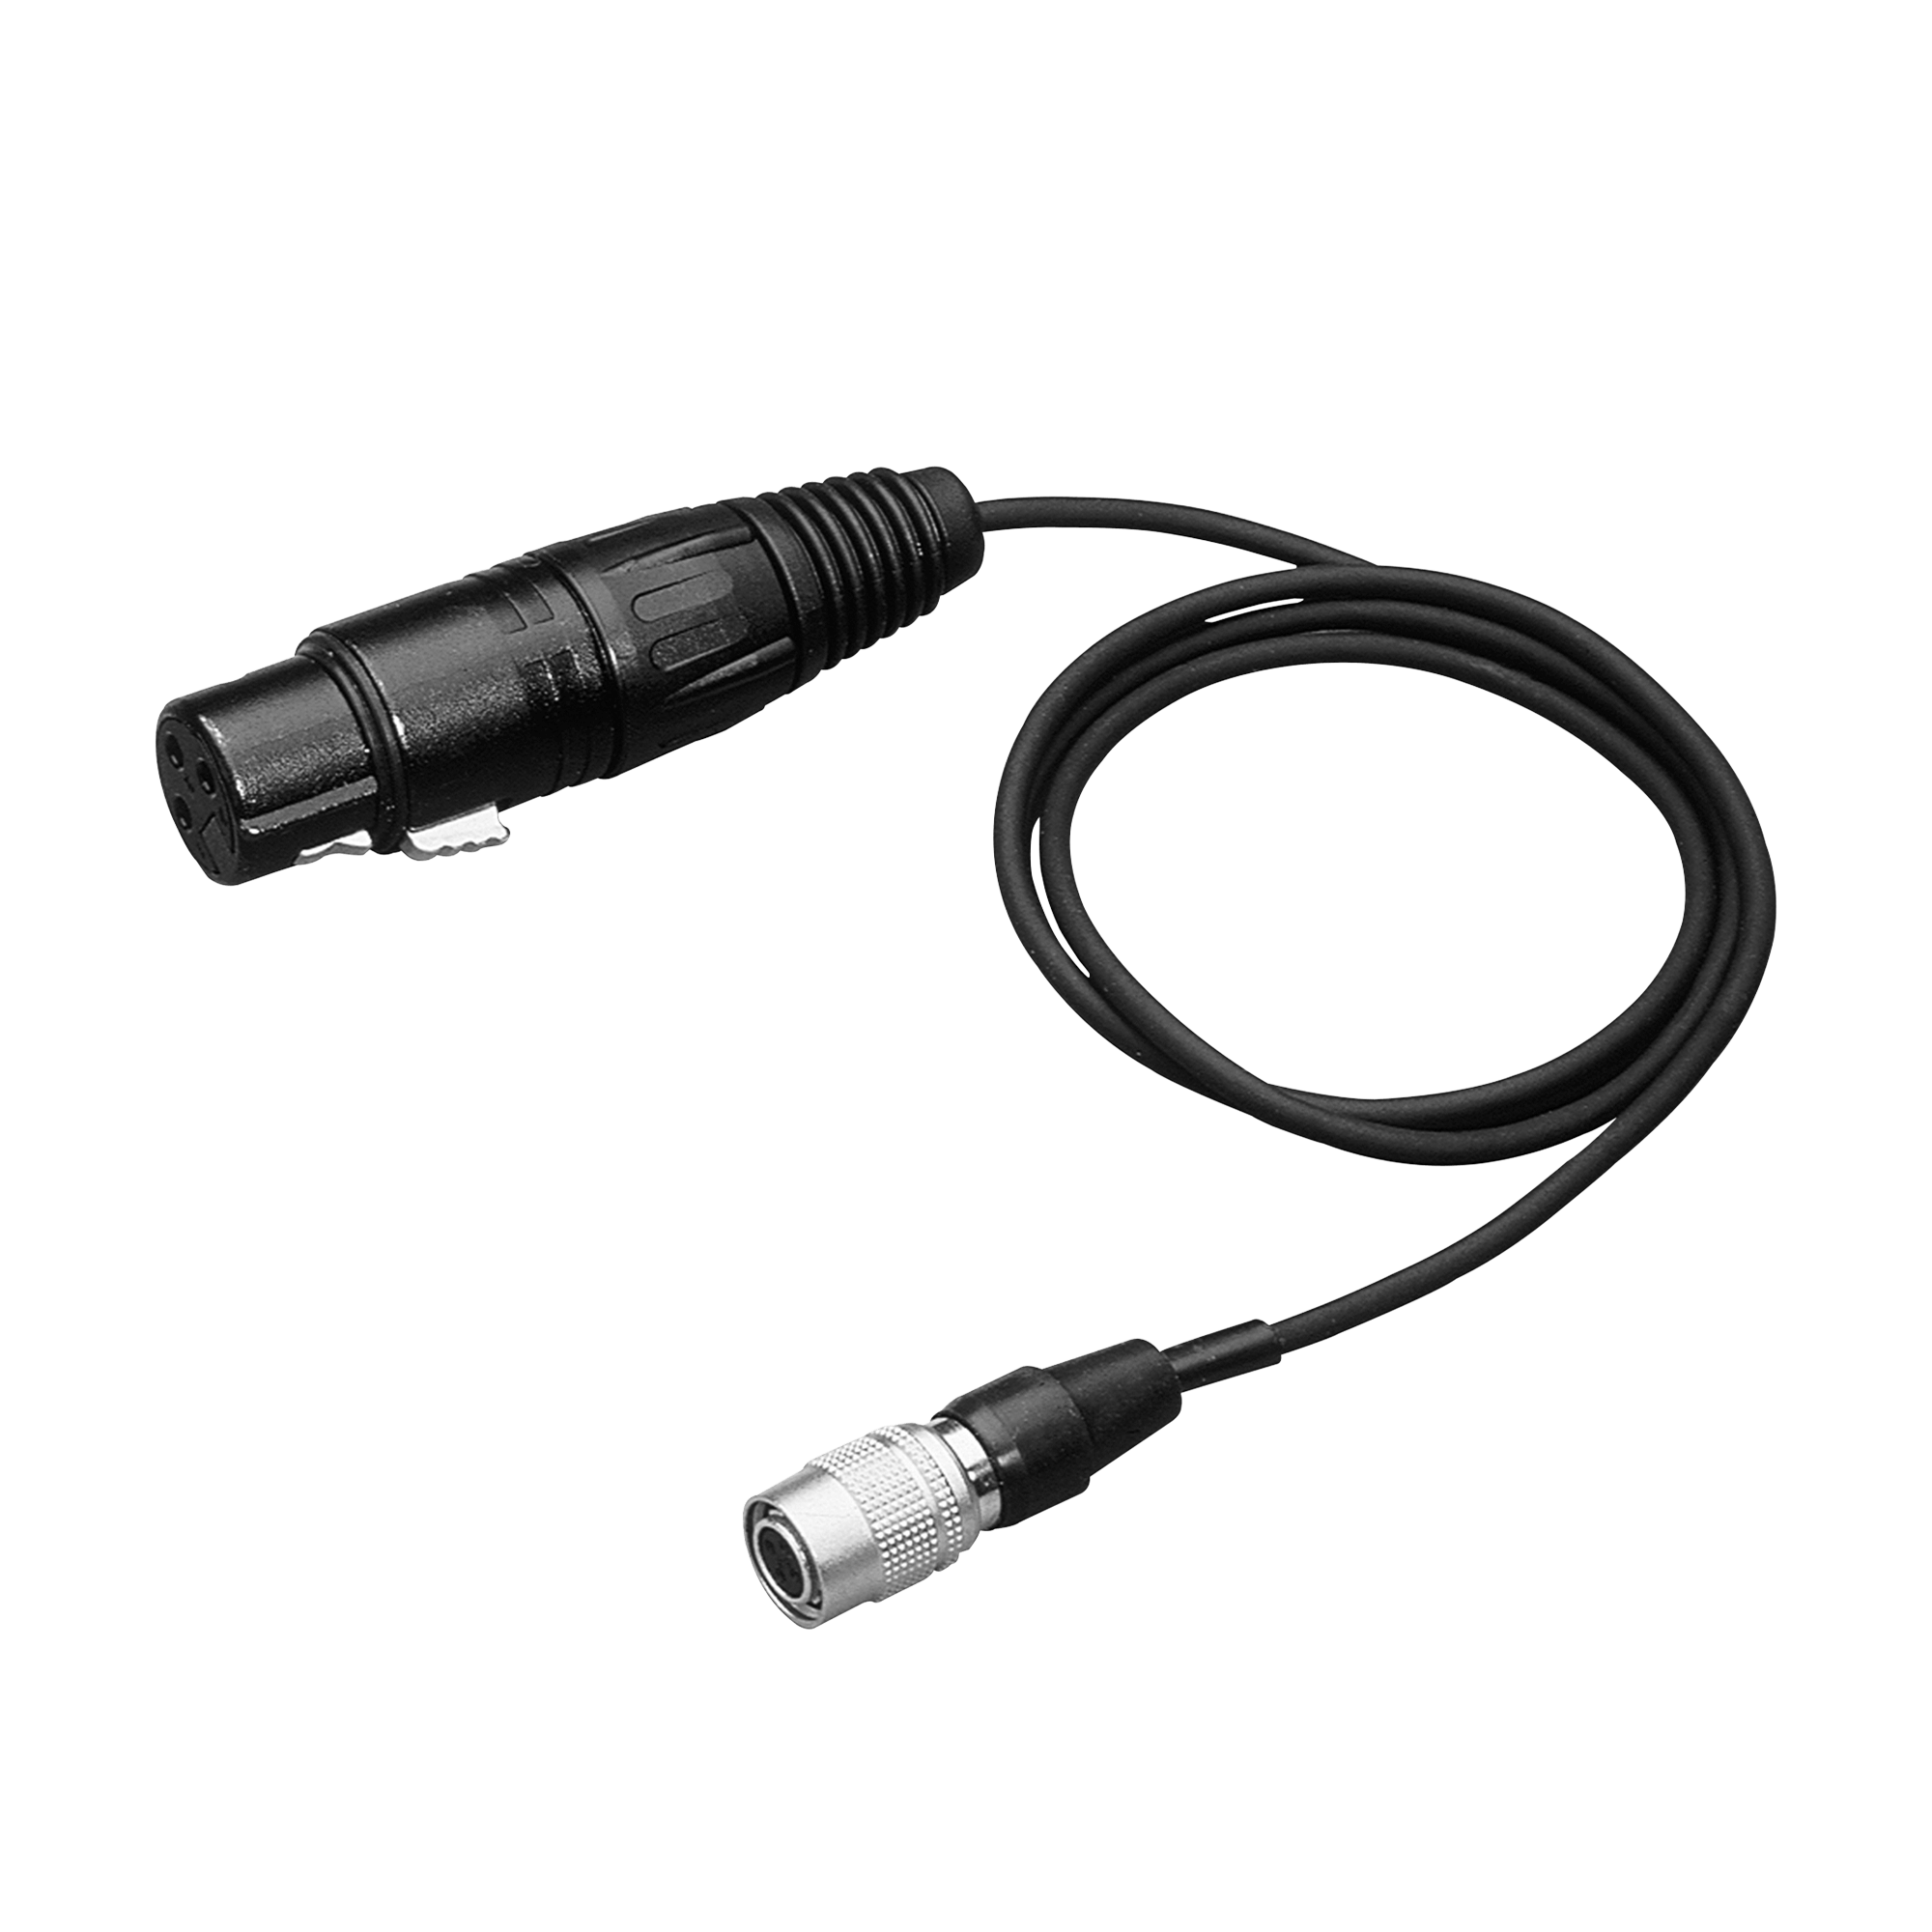 XLRWCâble microphone pour système sans fil